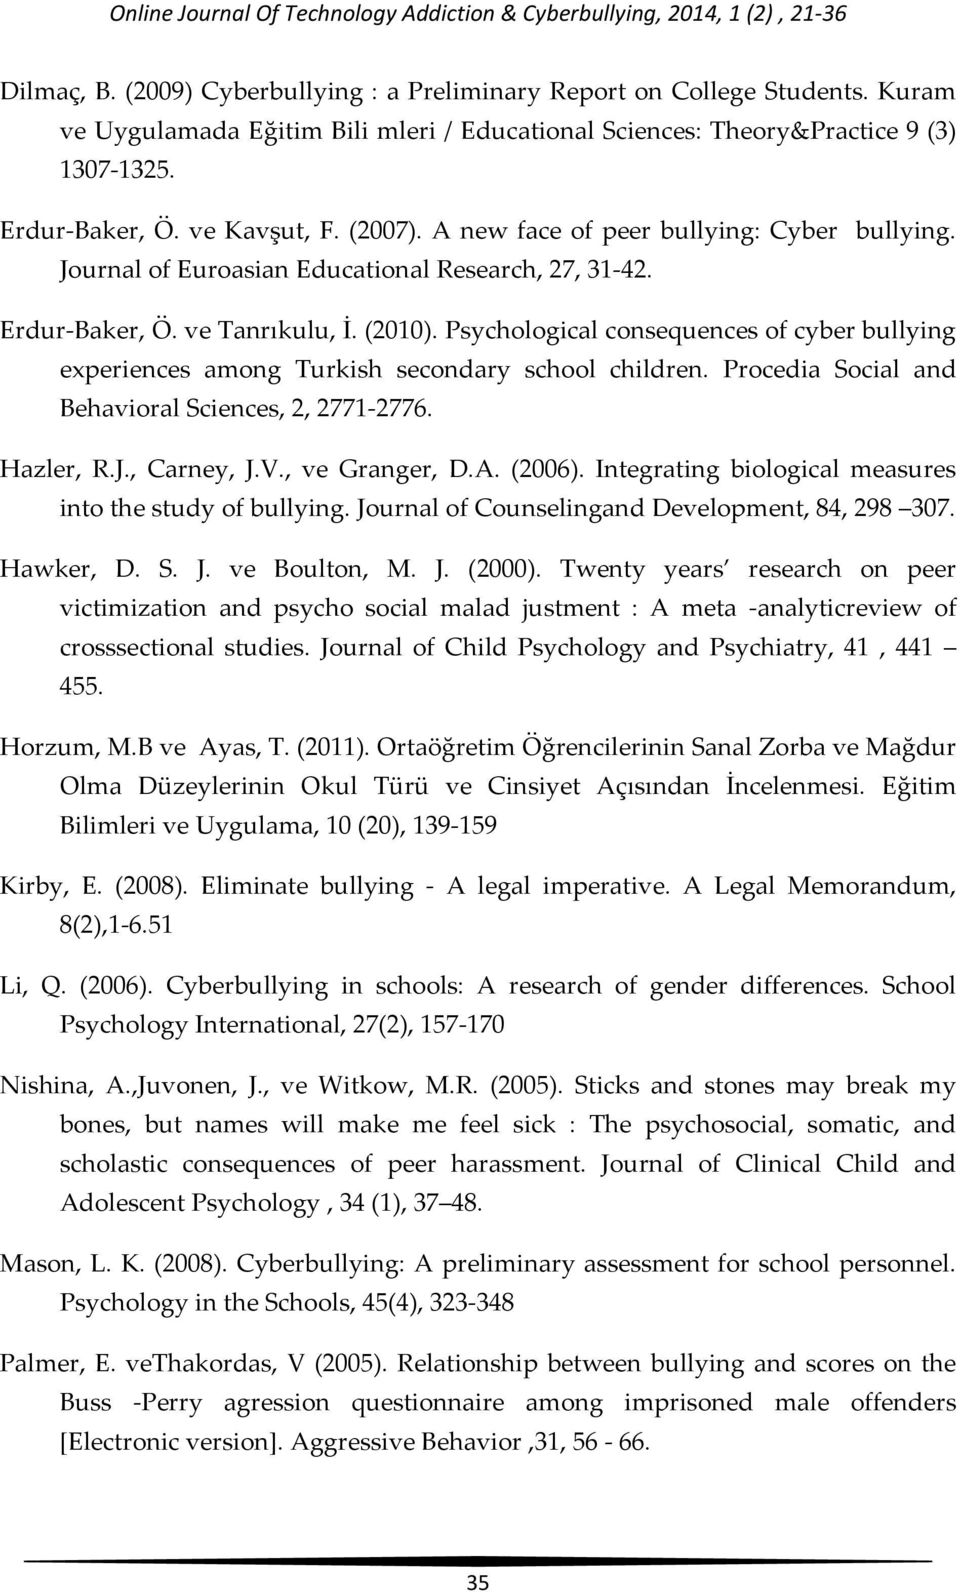 Journal of Euroasian Educational Research, 27, 31-42. Erdur-Baker, Ö. ve Tanrıkulu, İ. (2010). Psychological consequences of cyber bullying experiences among Turkish secondary school children.